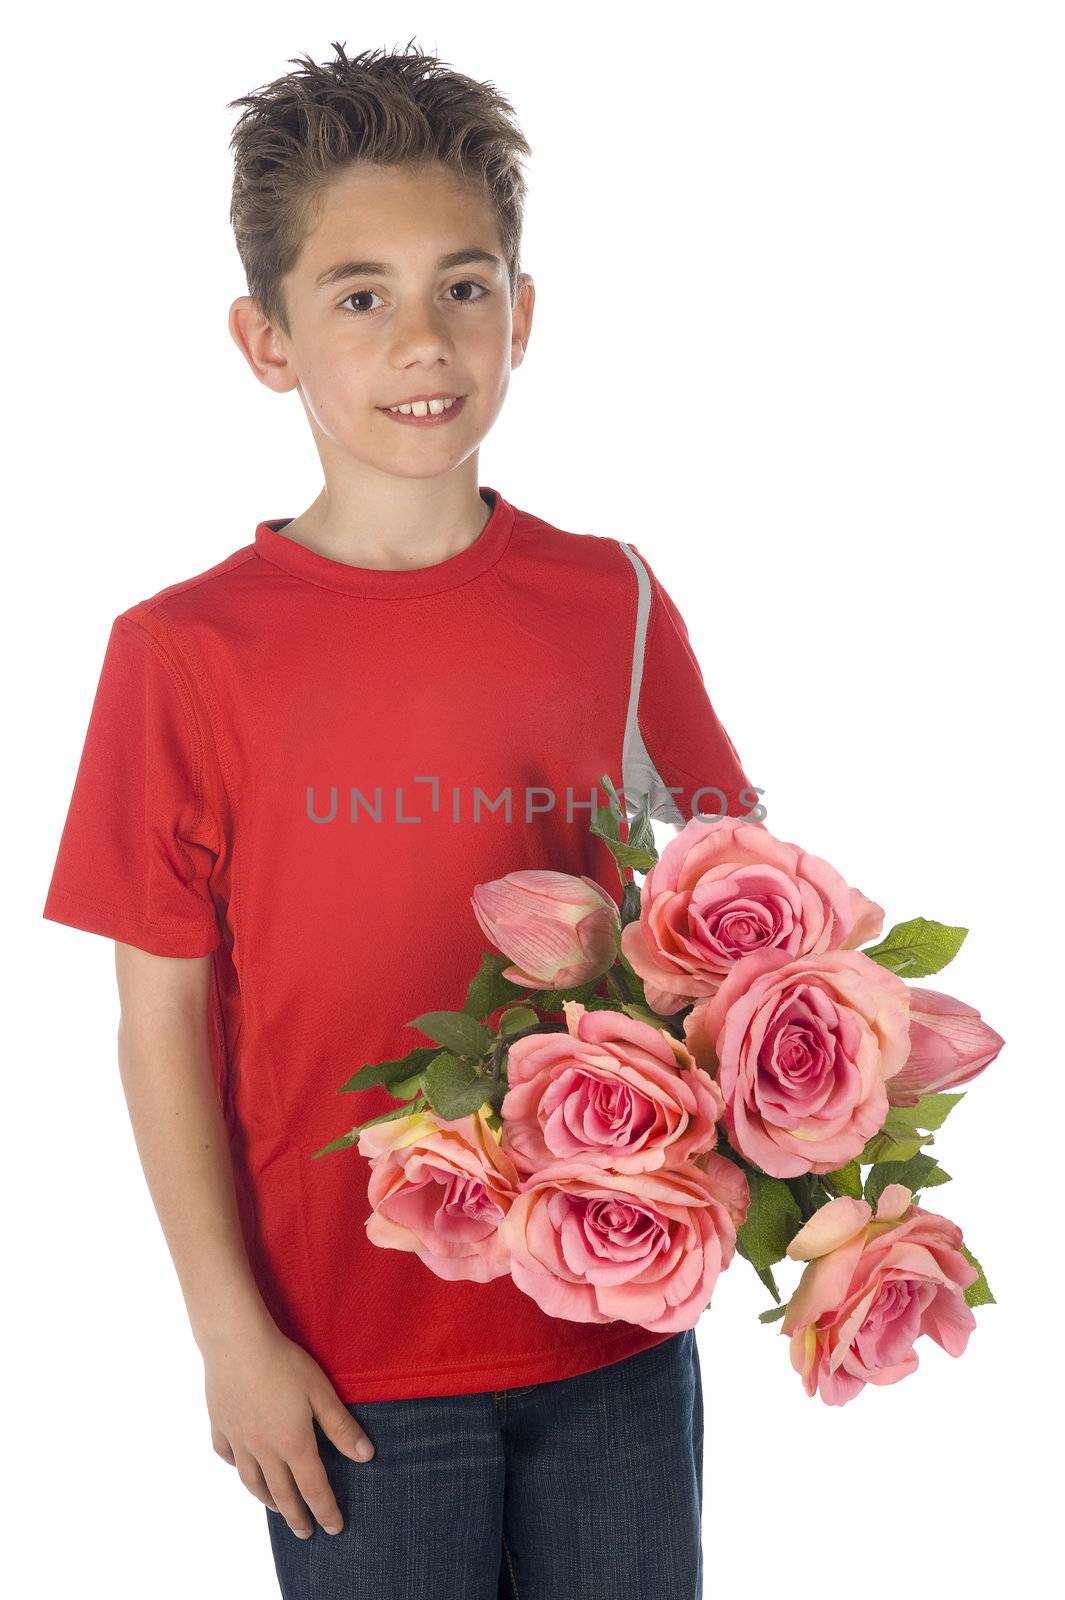 a Boy with a bouquet